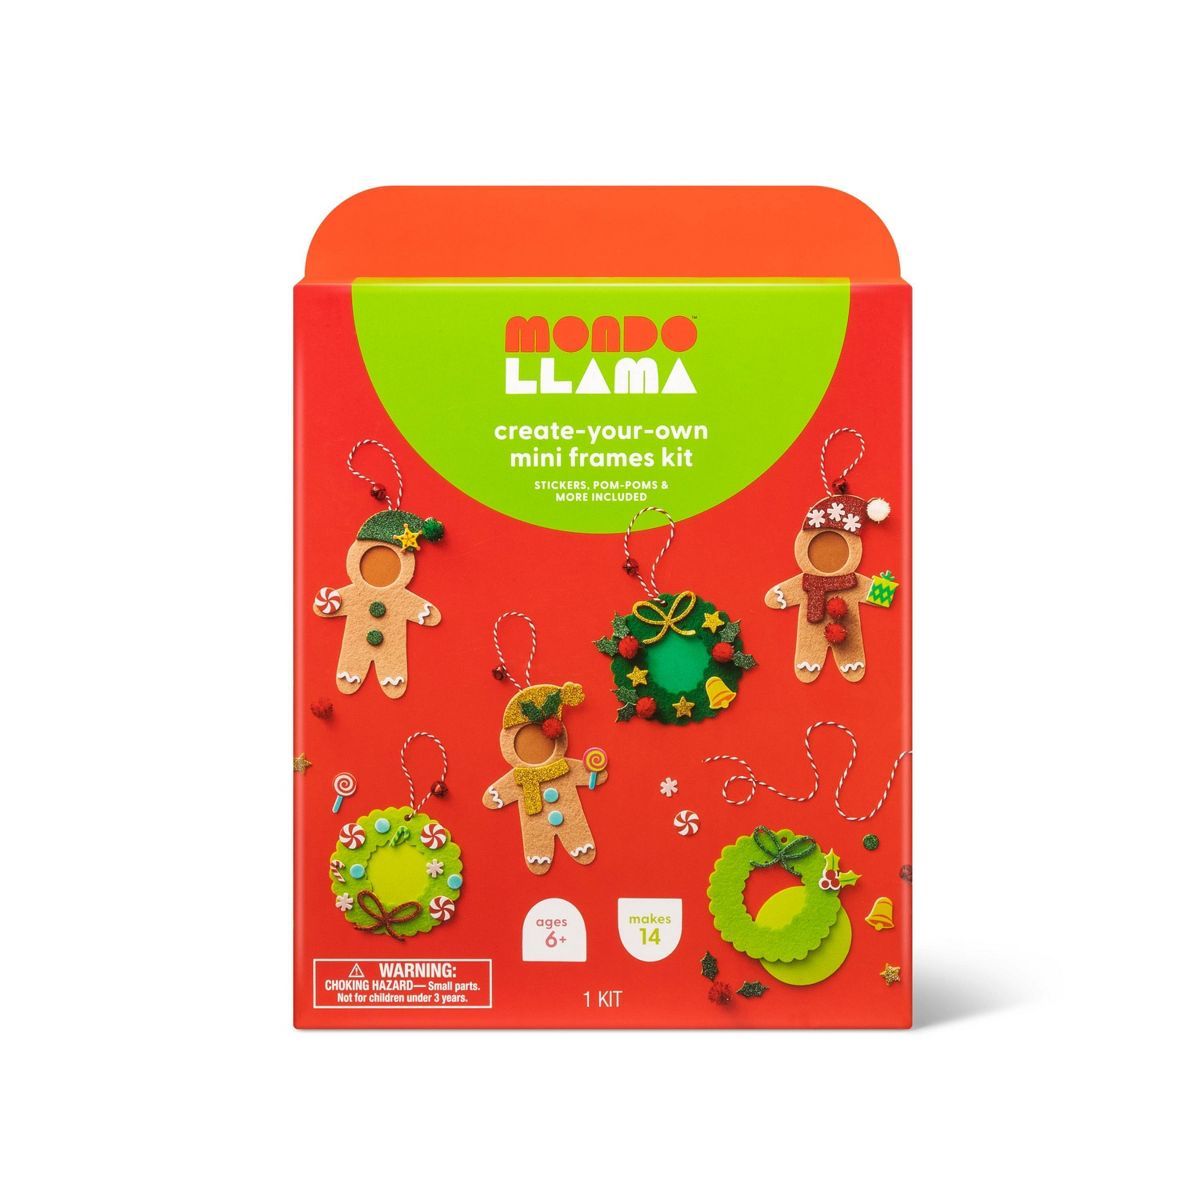 Create-Your-Own Mini Felt Frames Kit - Mondo Llama™ | Target